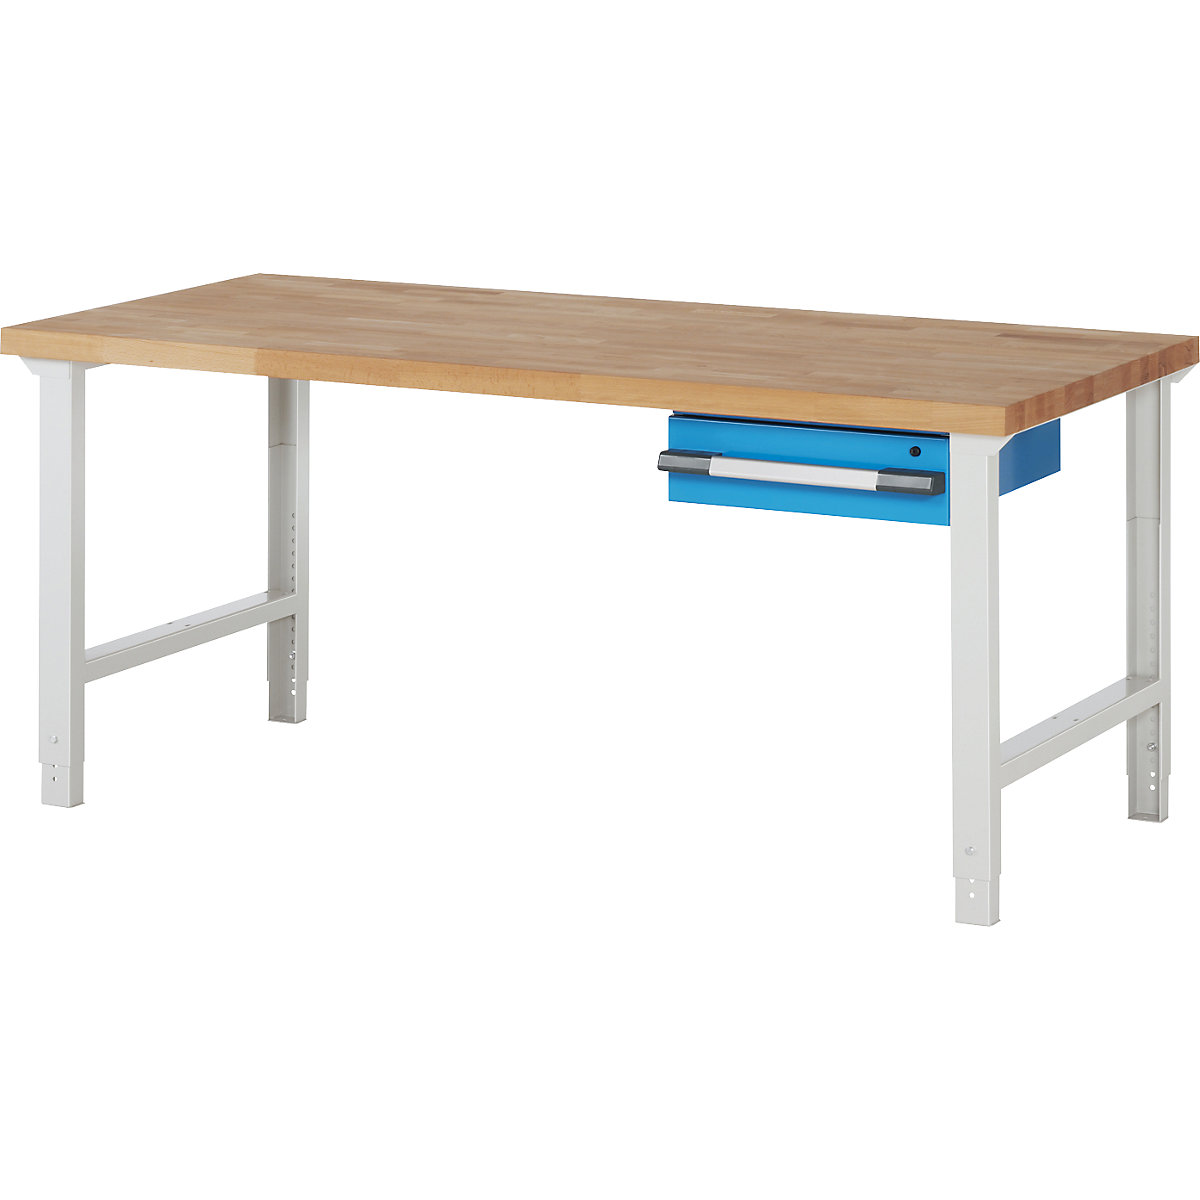 EUROKRAFTpro – Modulna delovna miza, 1 viseč predal, ŠxG 2000 x 900 mm